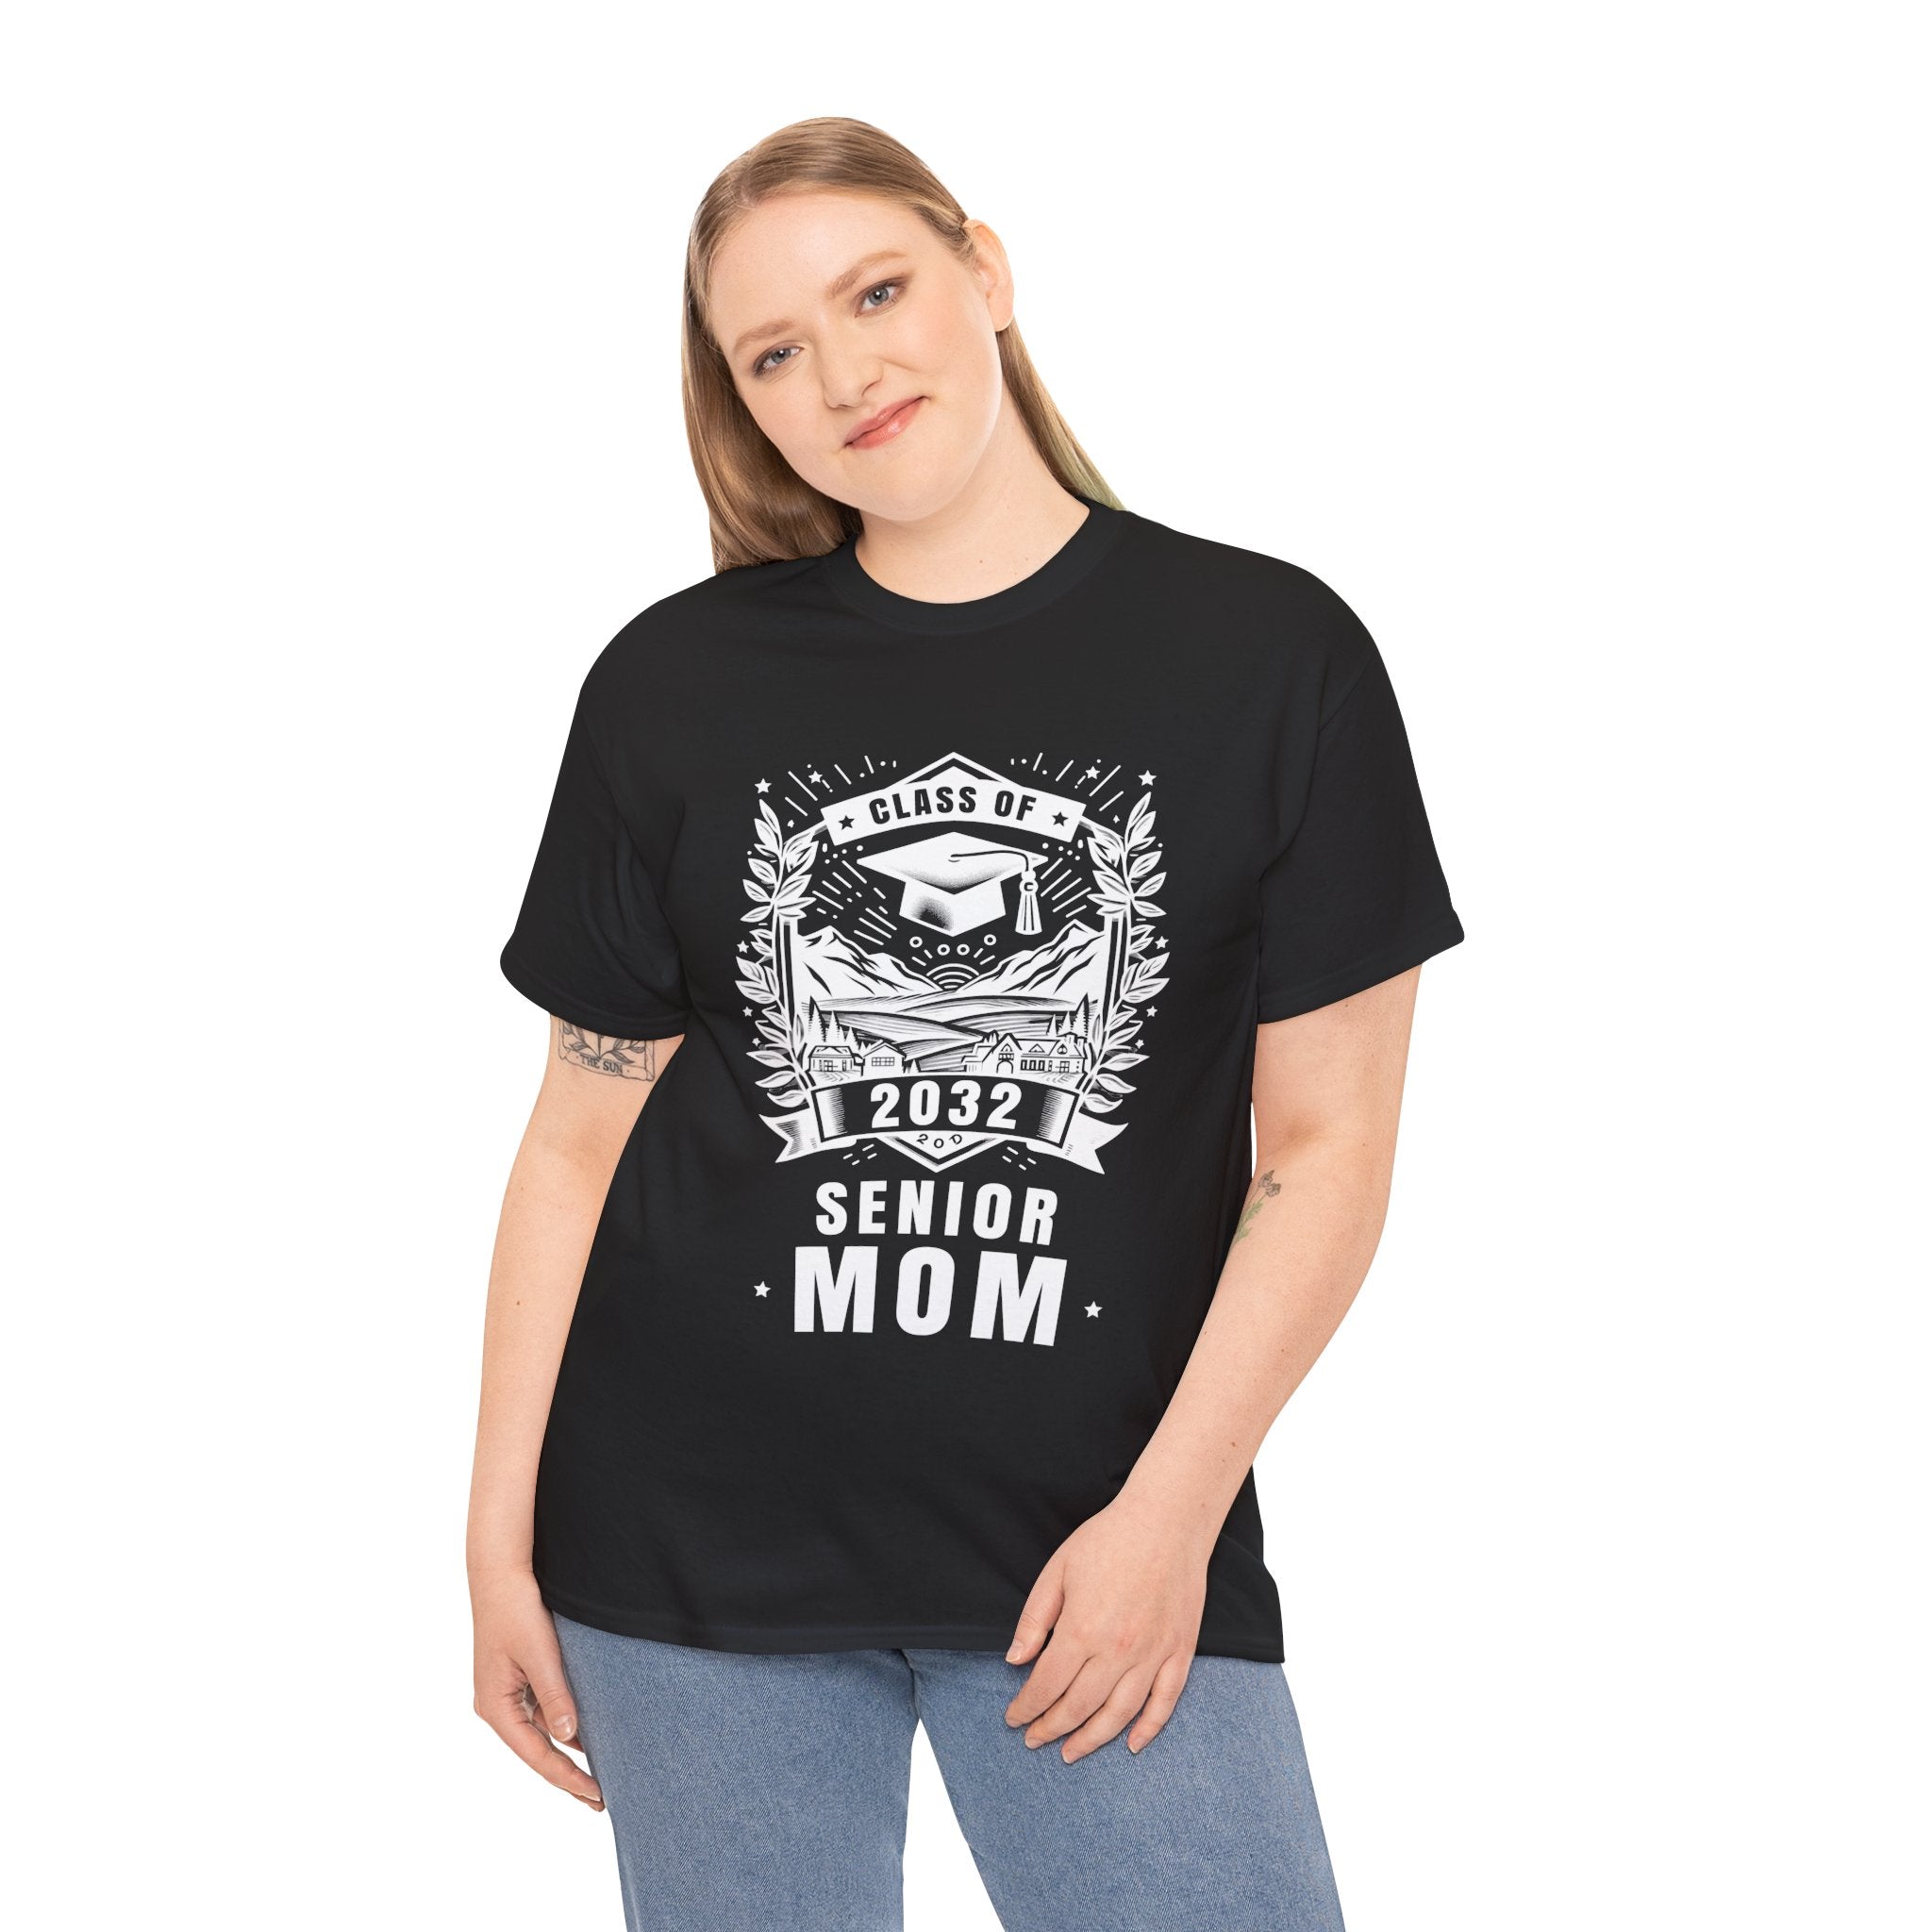 Senior Mom 32 Class of 2032 Back to School Graduation 2032 Plus Size Shirts for Women